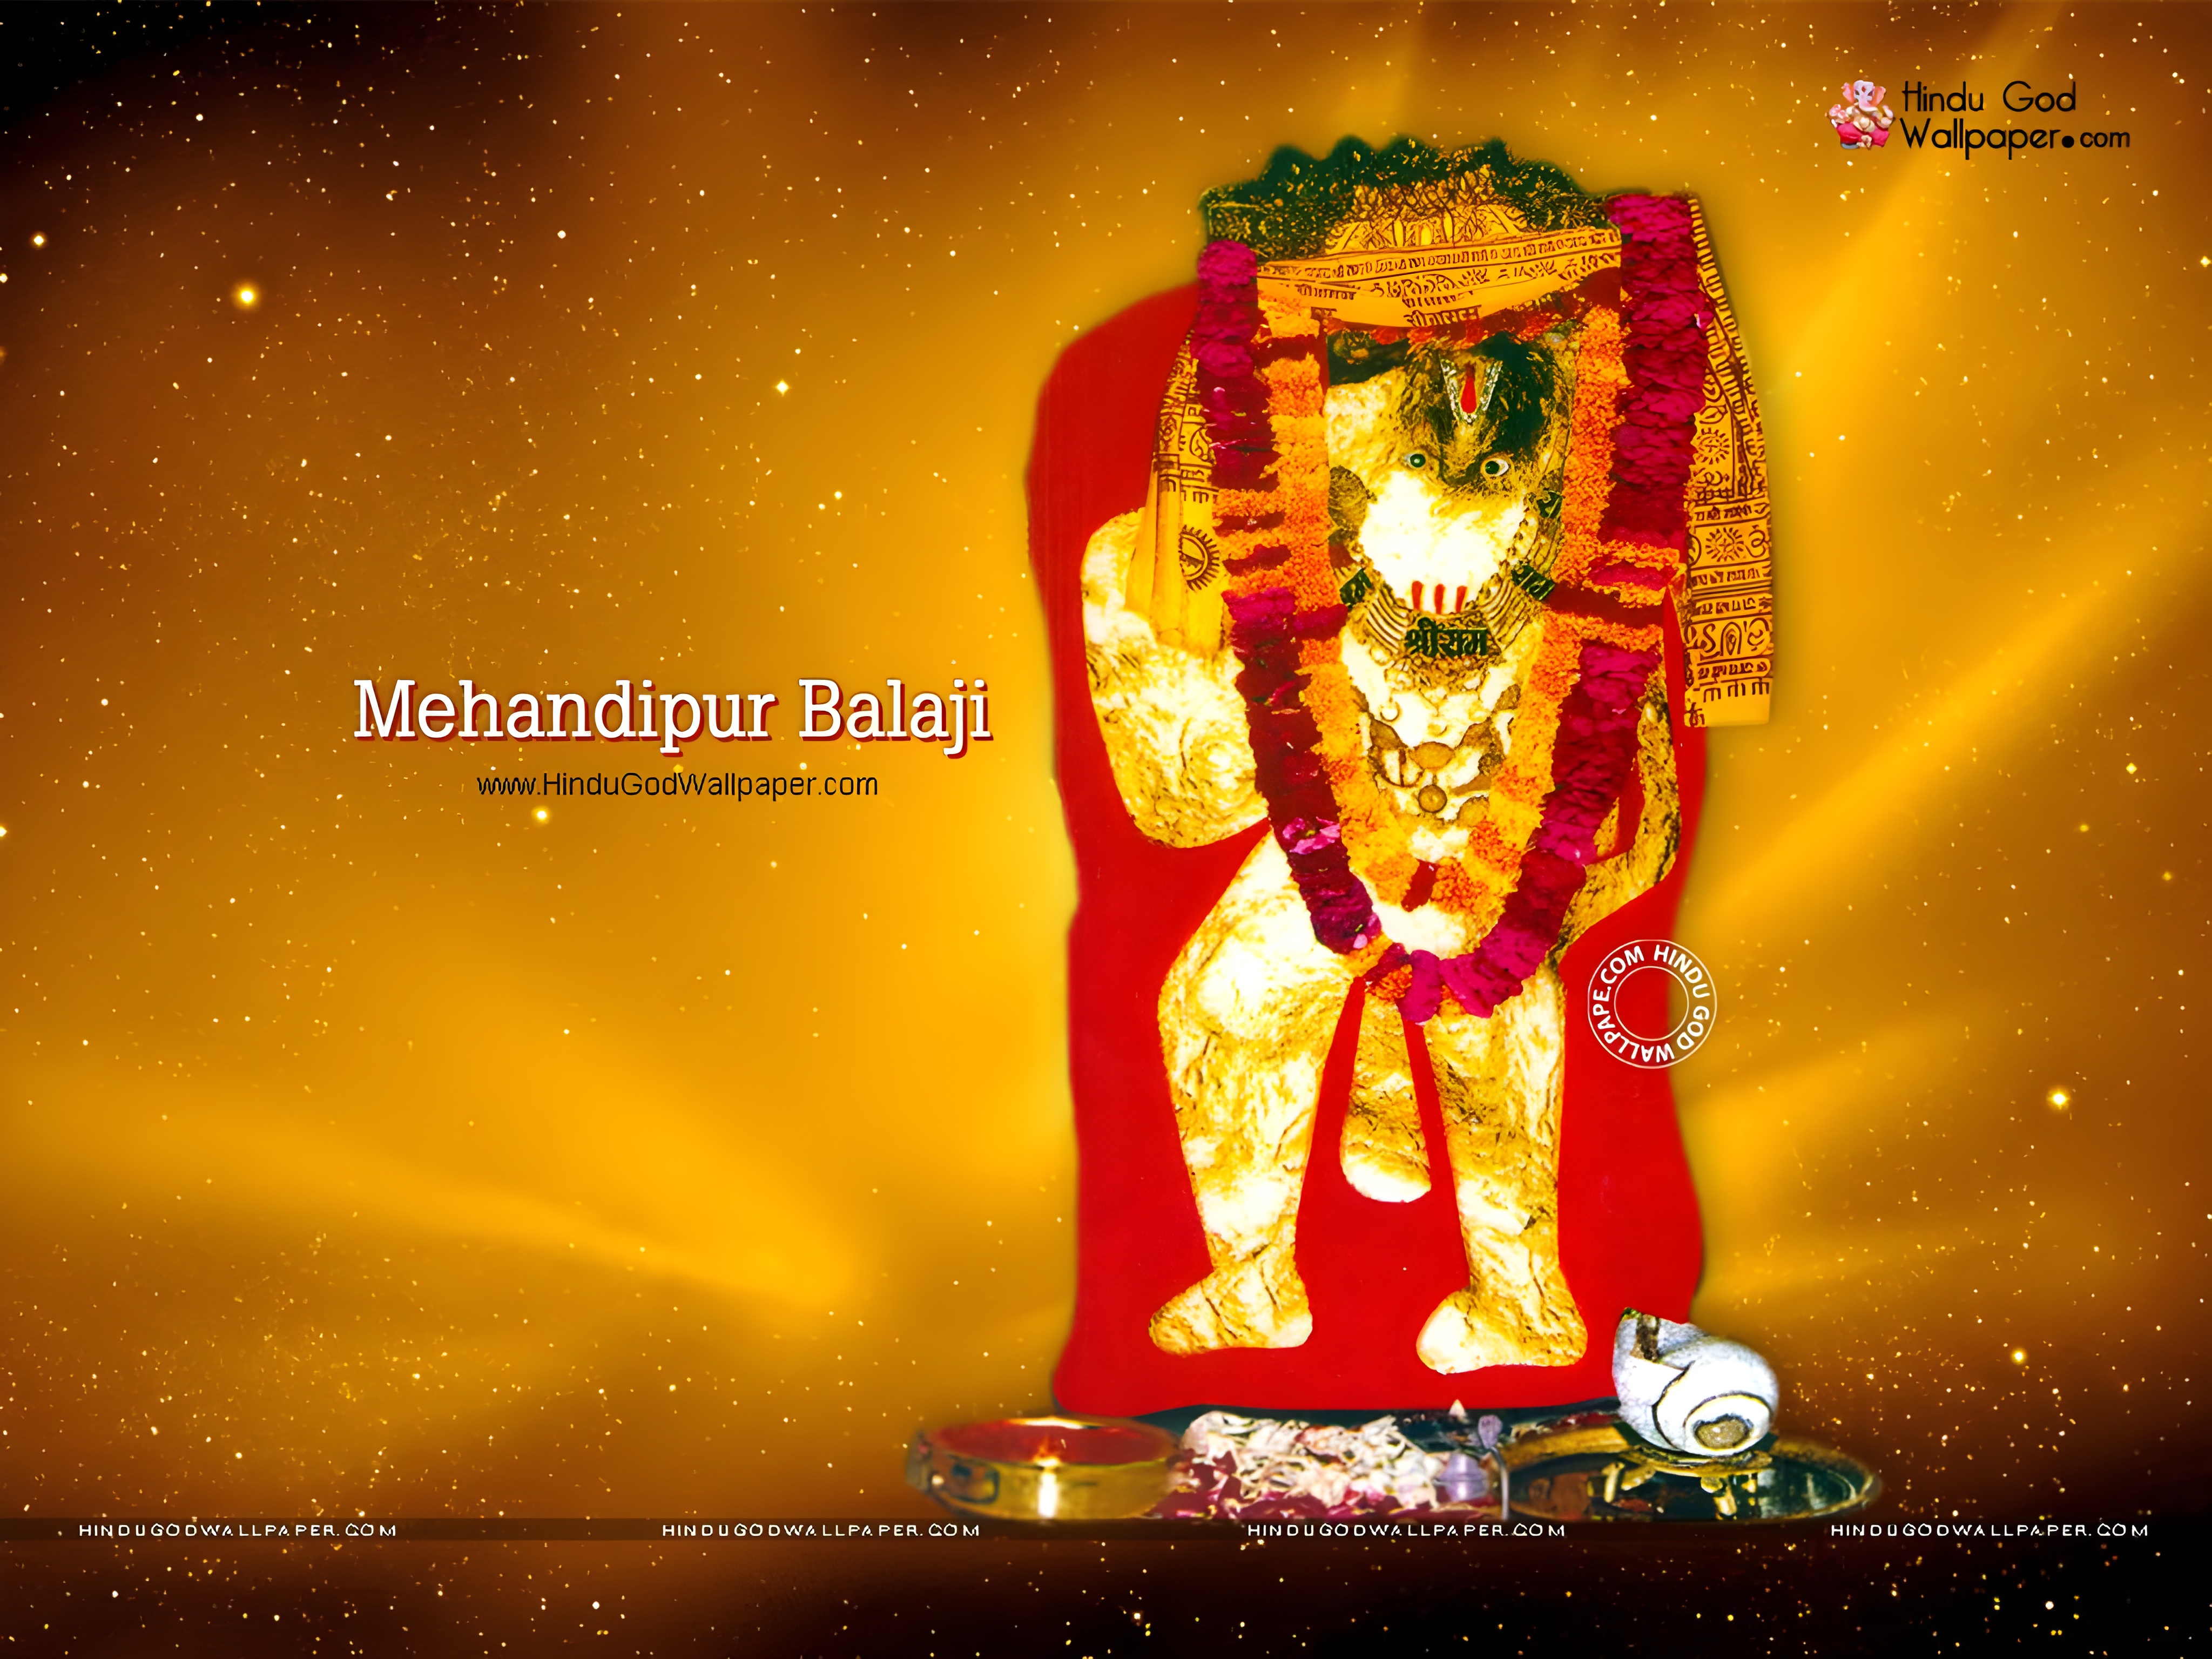 Mehandipur Balaji - god